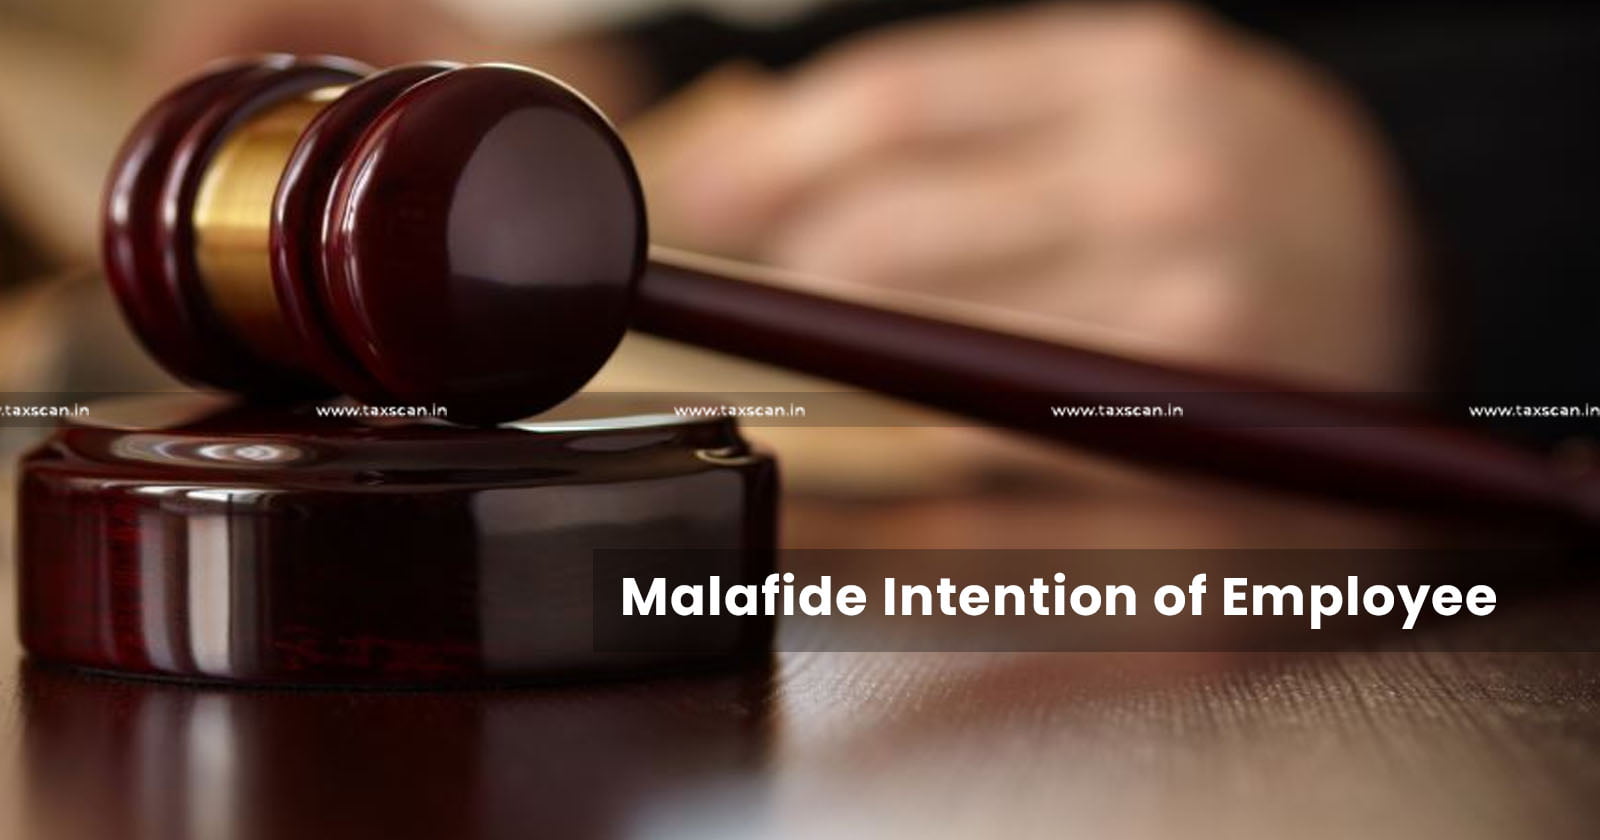 Malafide Intention of Employee - Employer - CESTAT - Personal Penalty - Taxscan